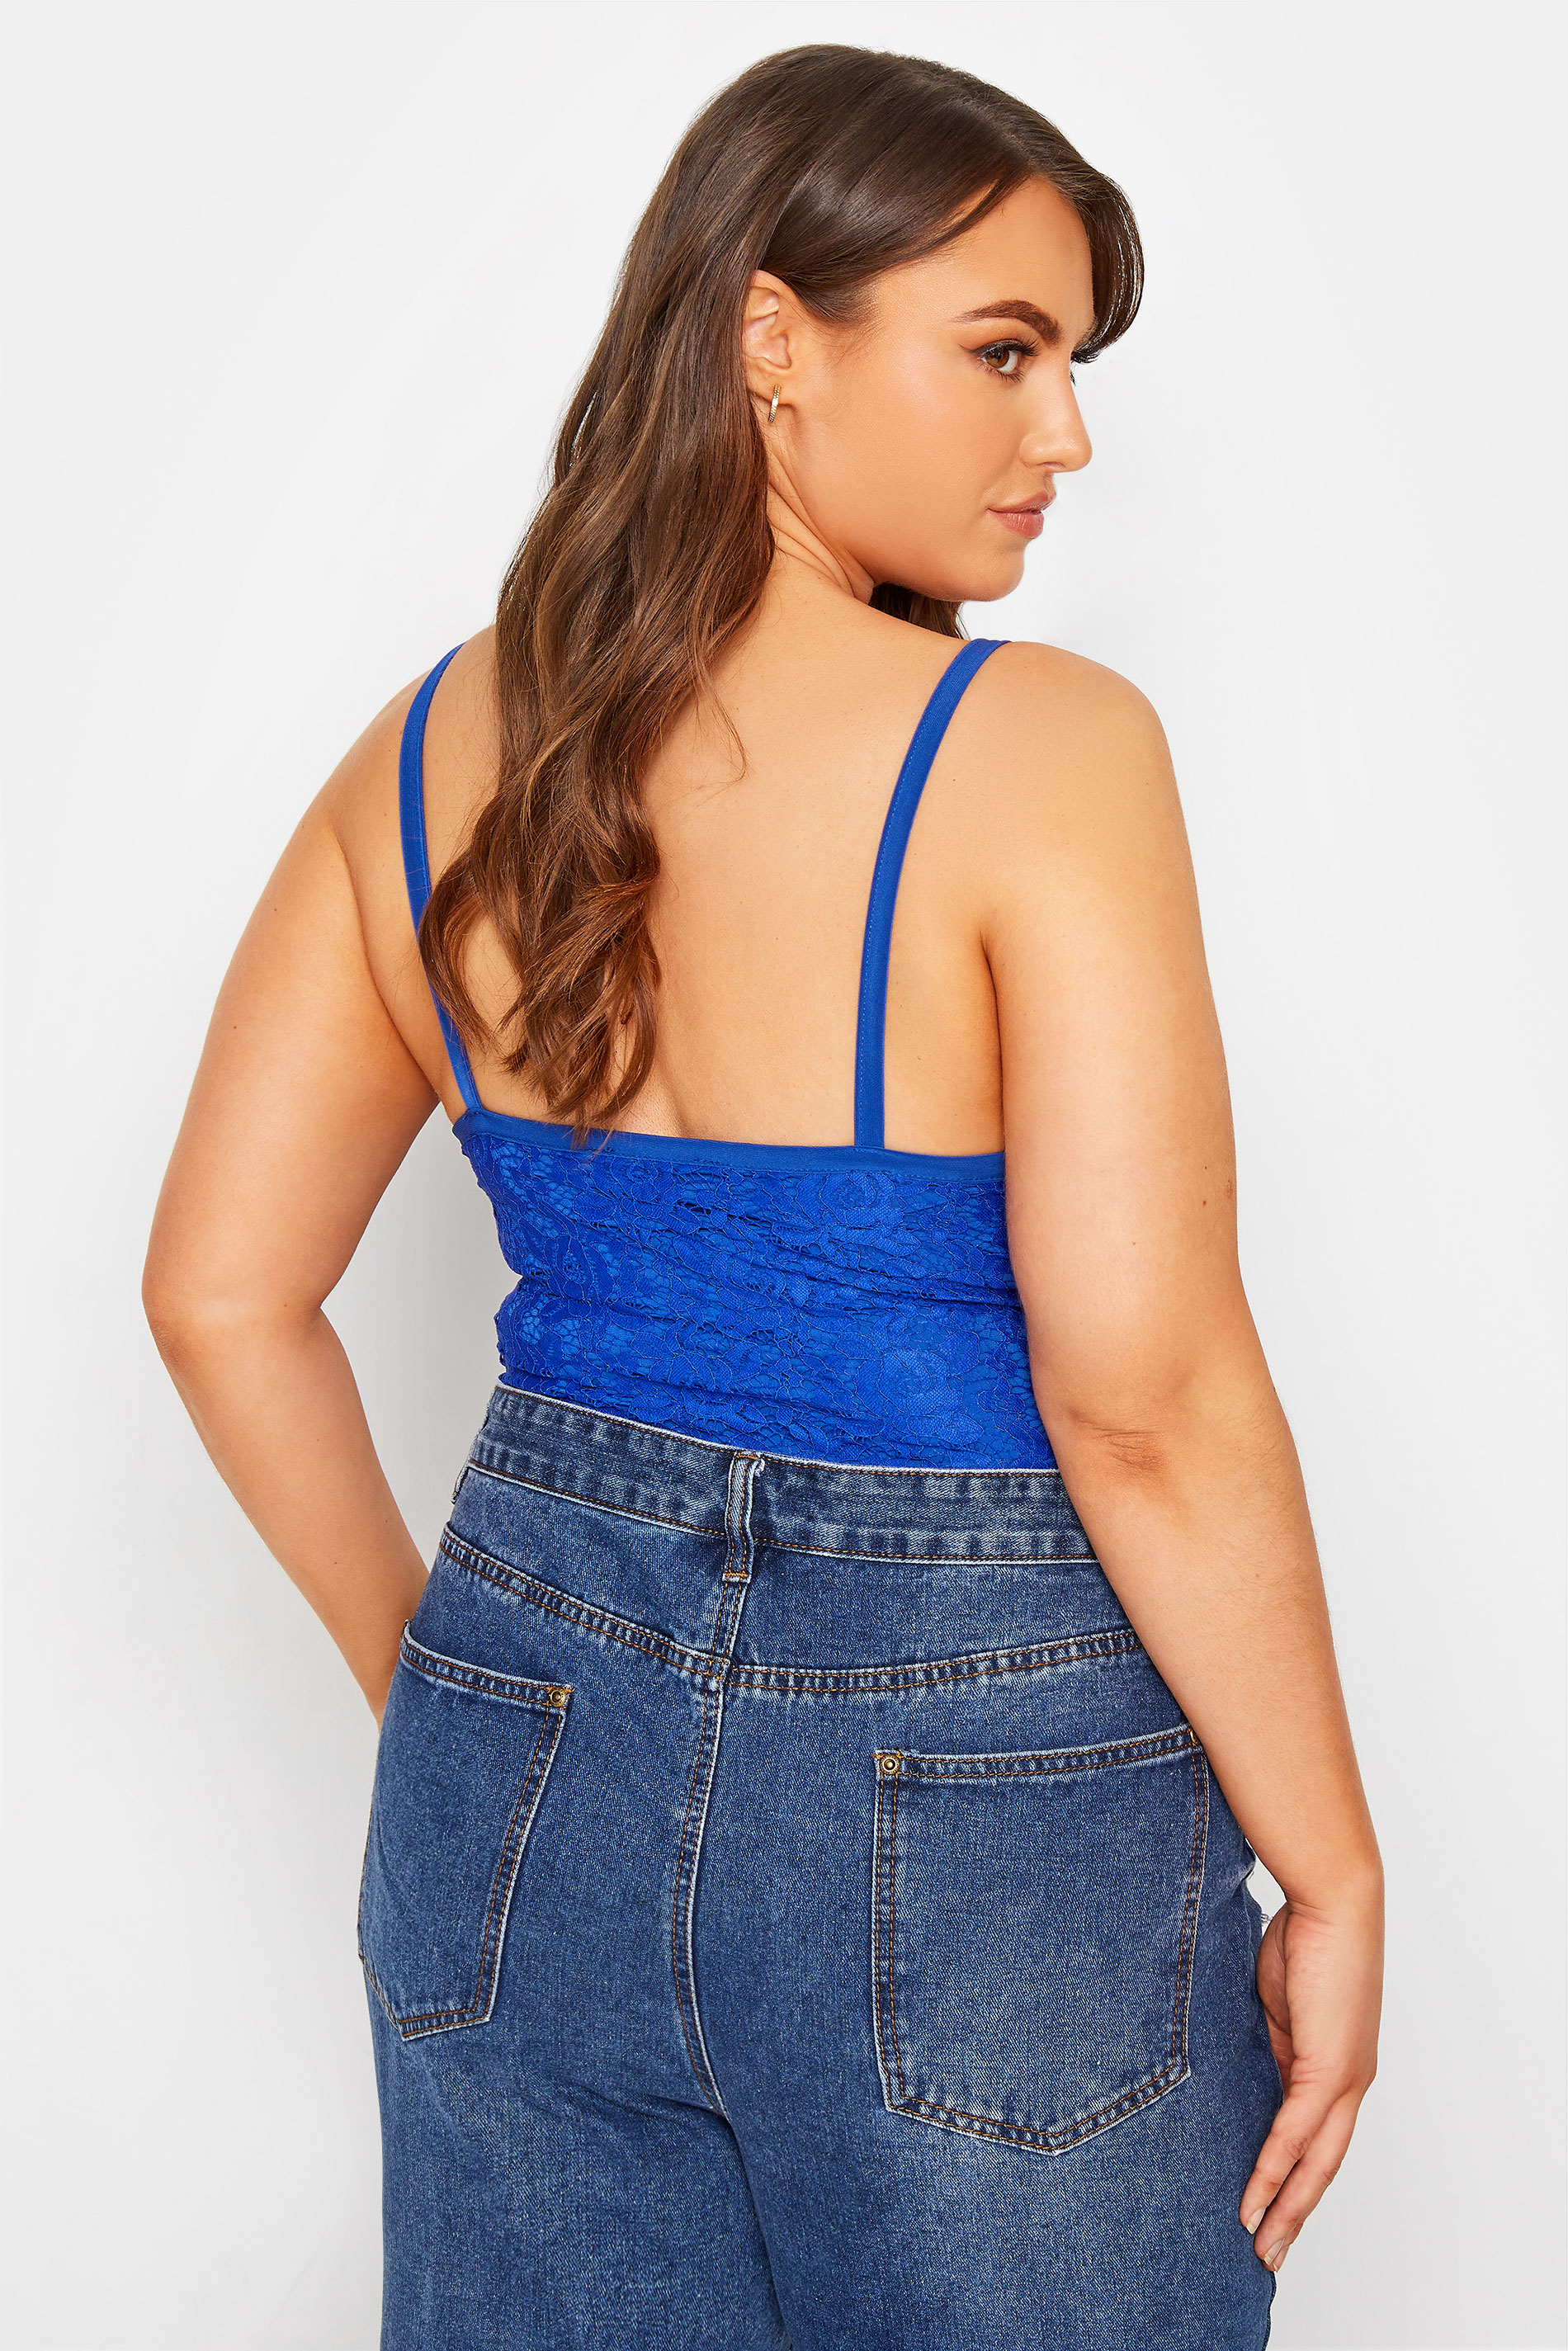 LIMITED COLLECTION Plus Size Cobalt Blue Lace Bodysuit | Yours Clothing 3